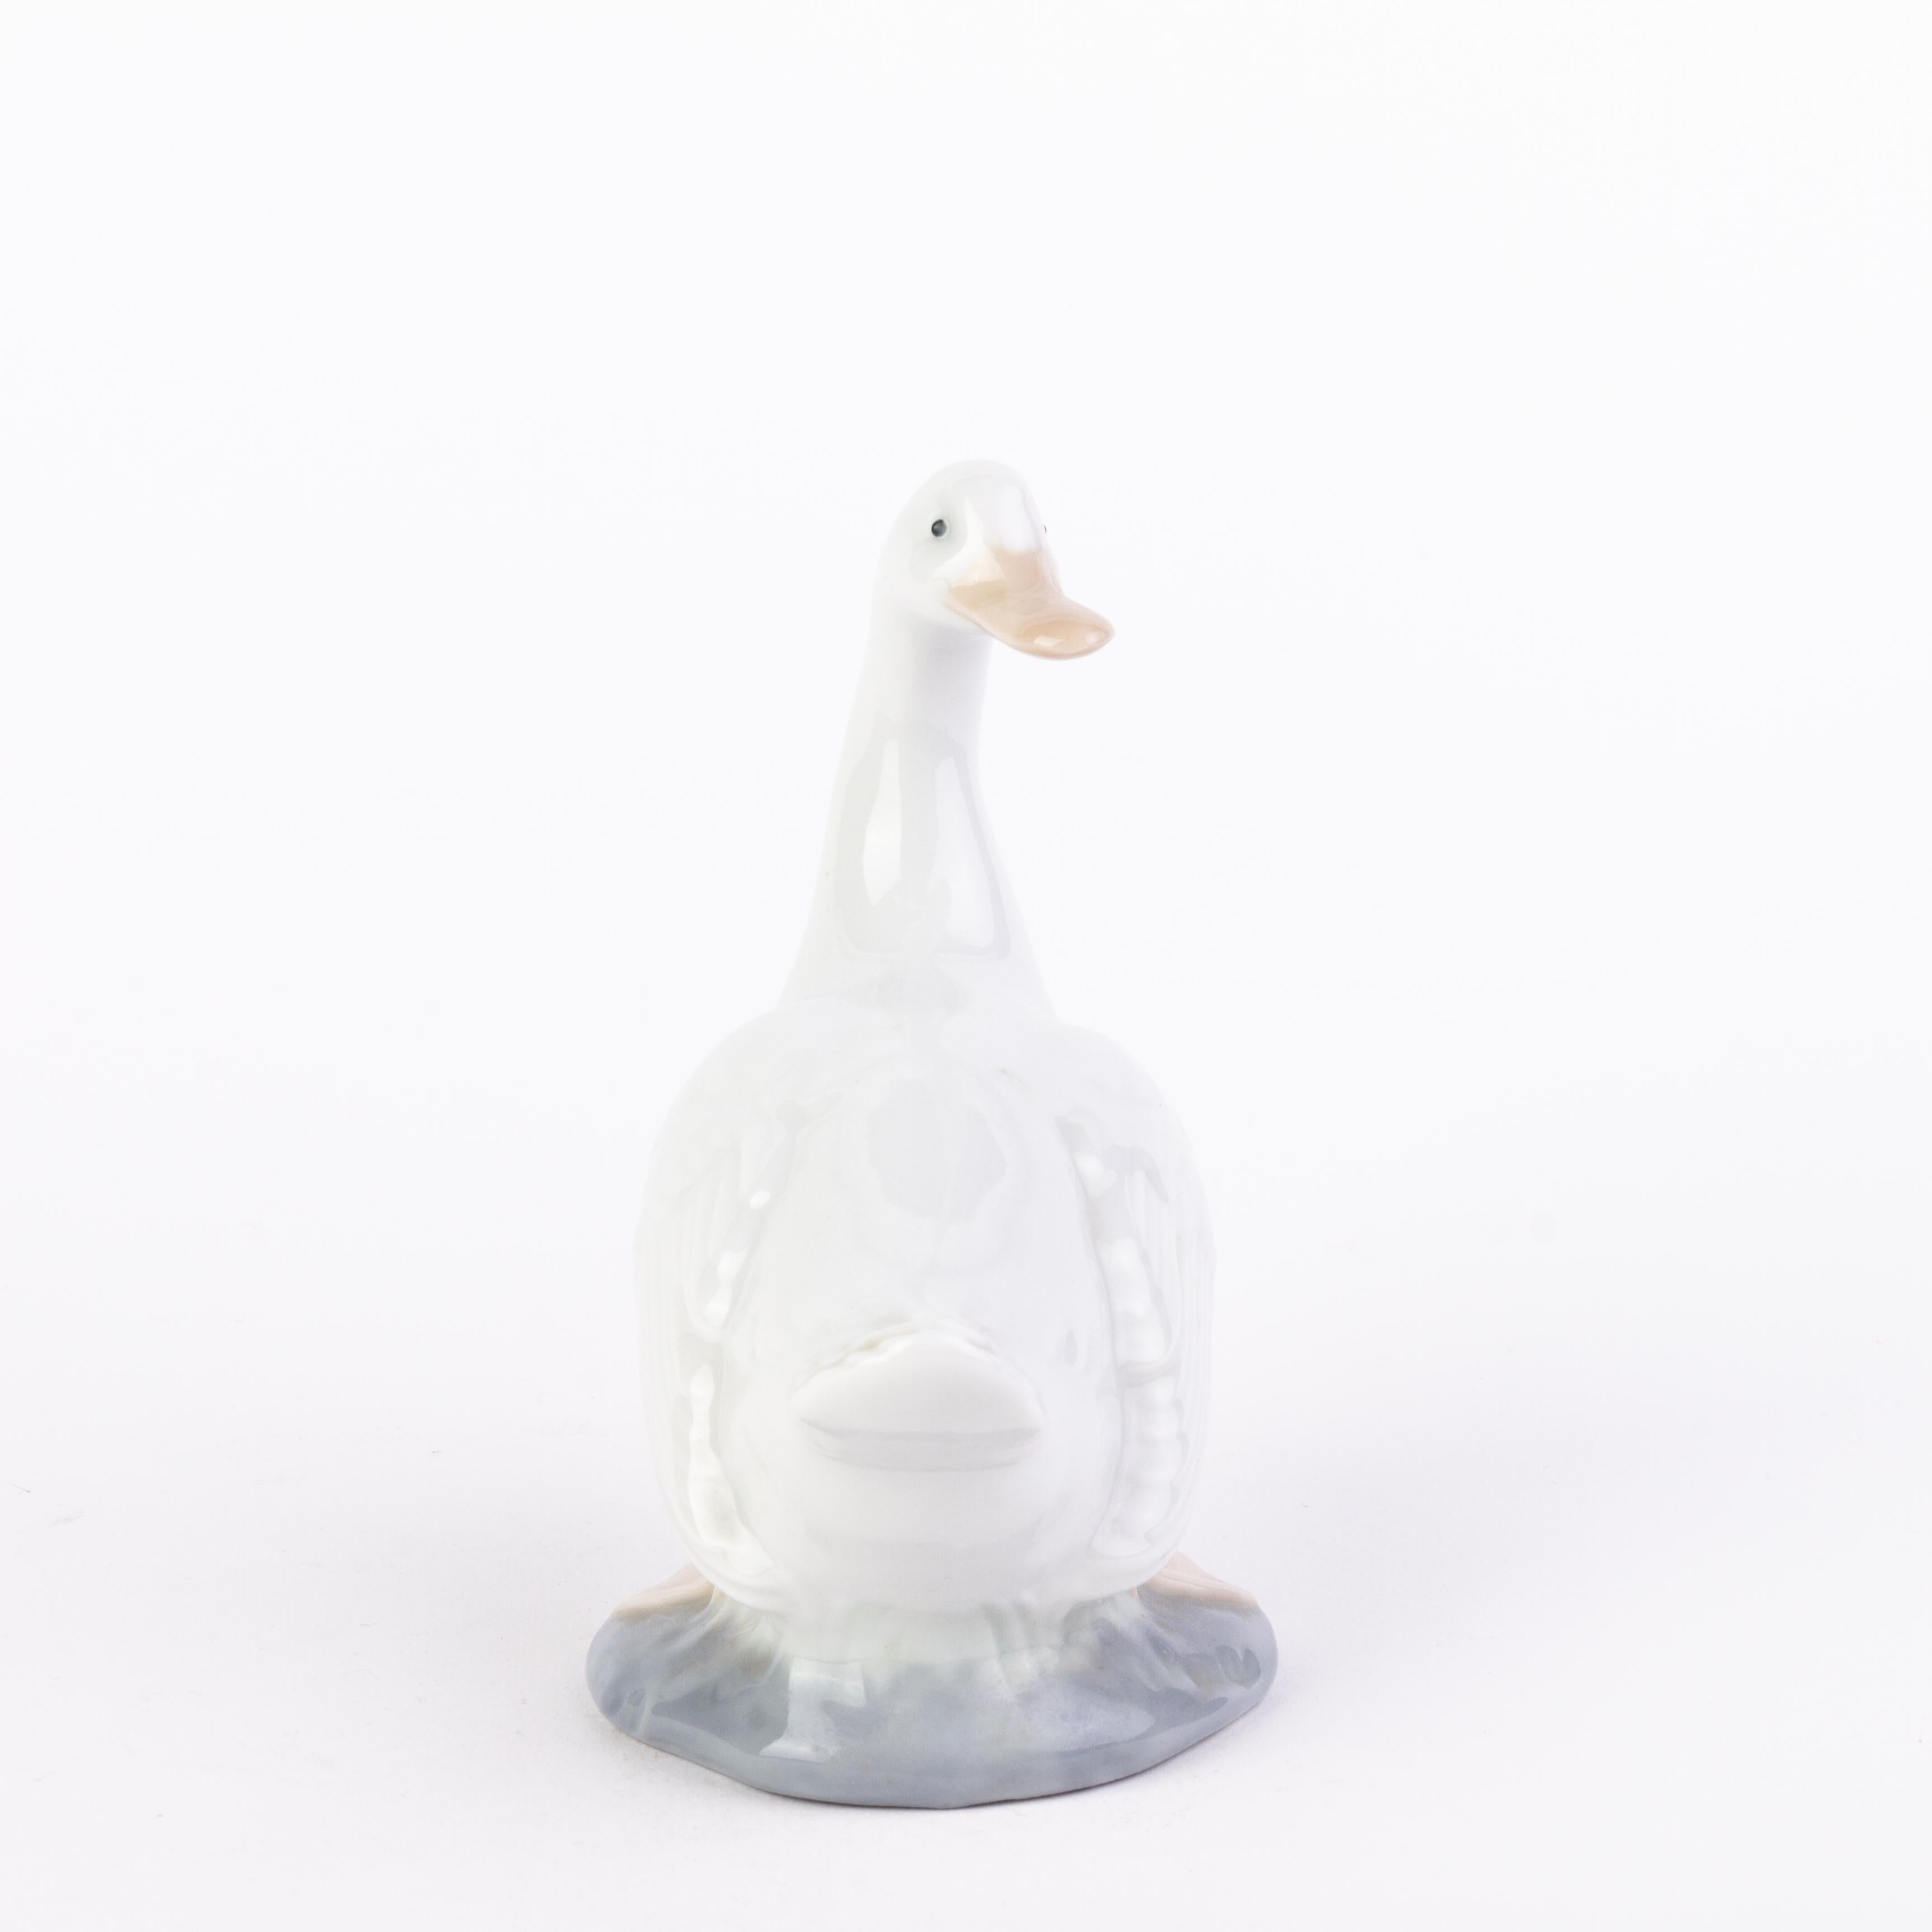 Nao Lladro Fine Porcelain Sculpture Figure Goose Duck
Good condition 
Free international shipping.